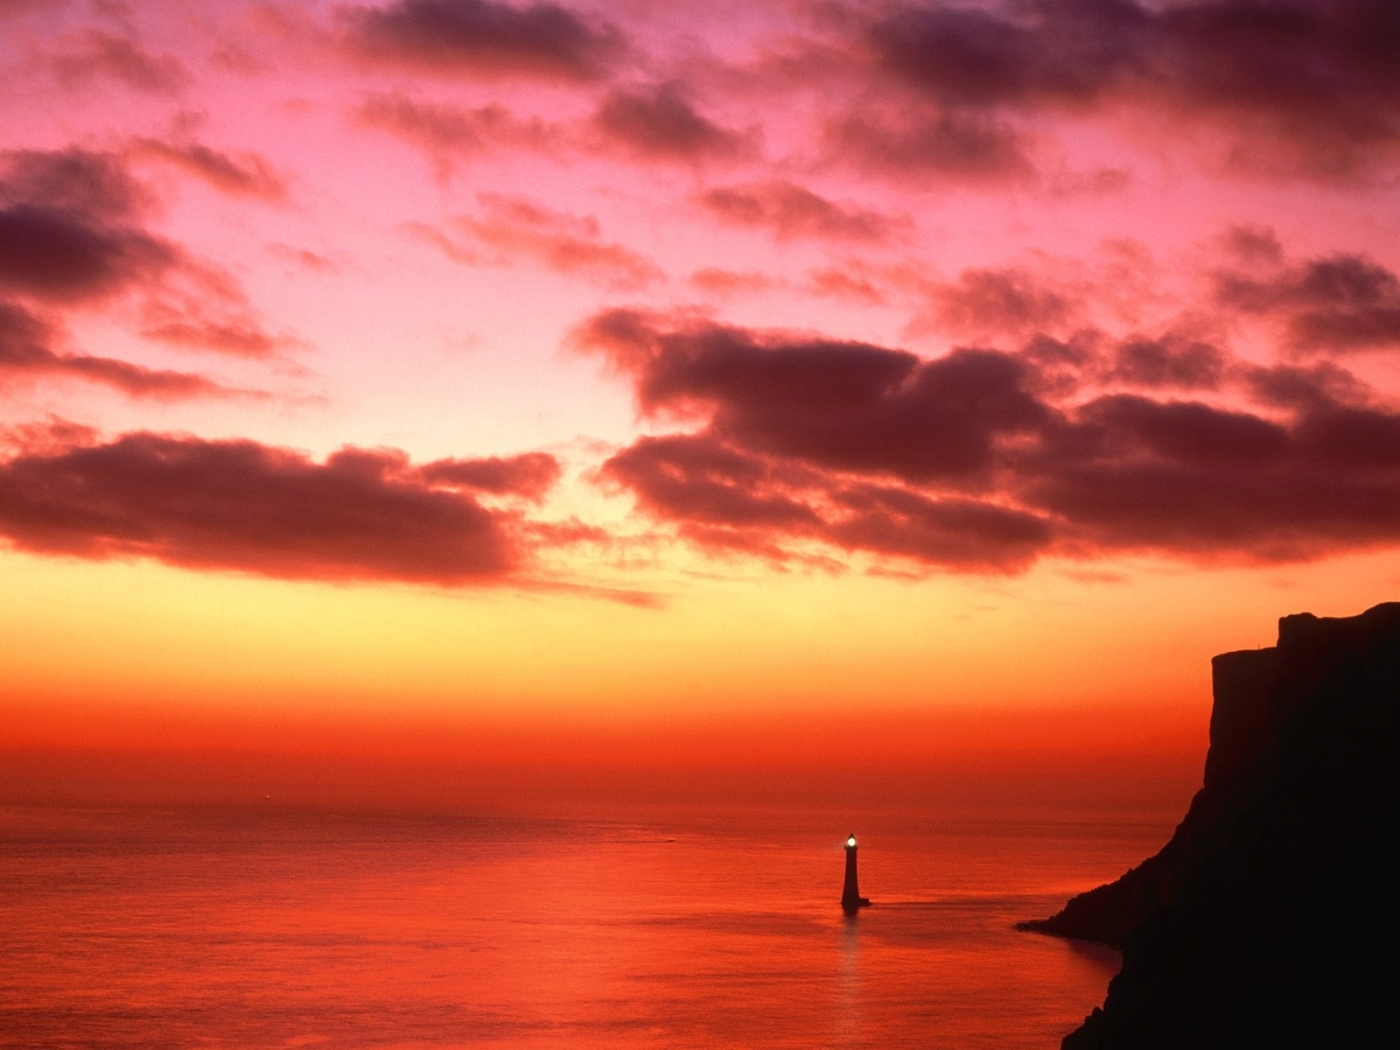 lighthouses, landscape, sunset, red